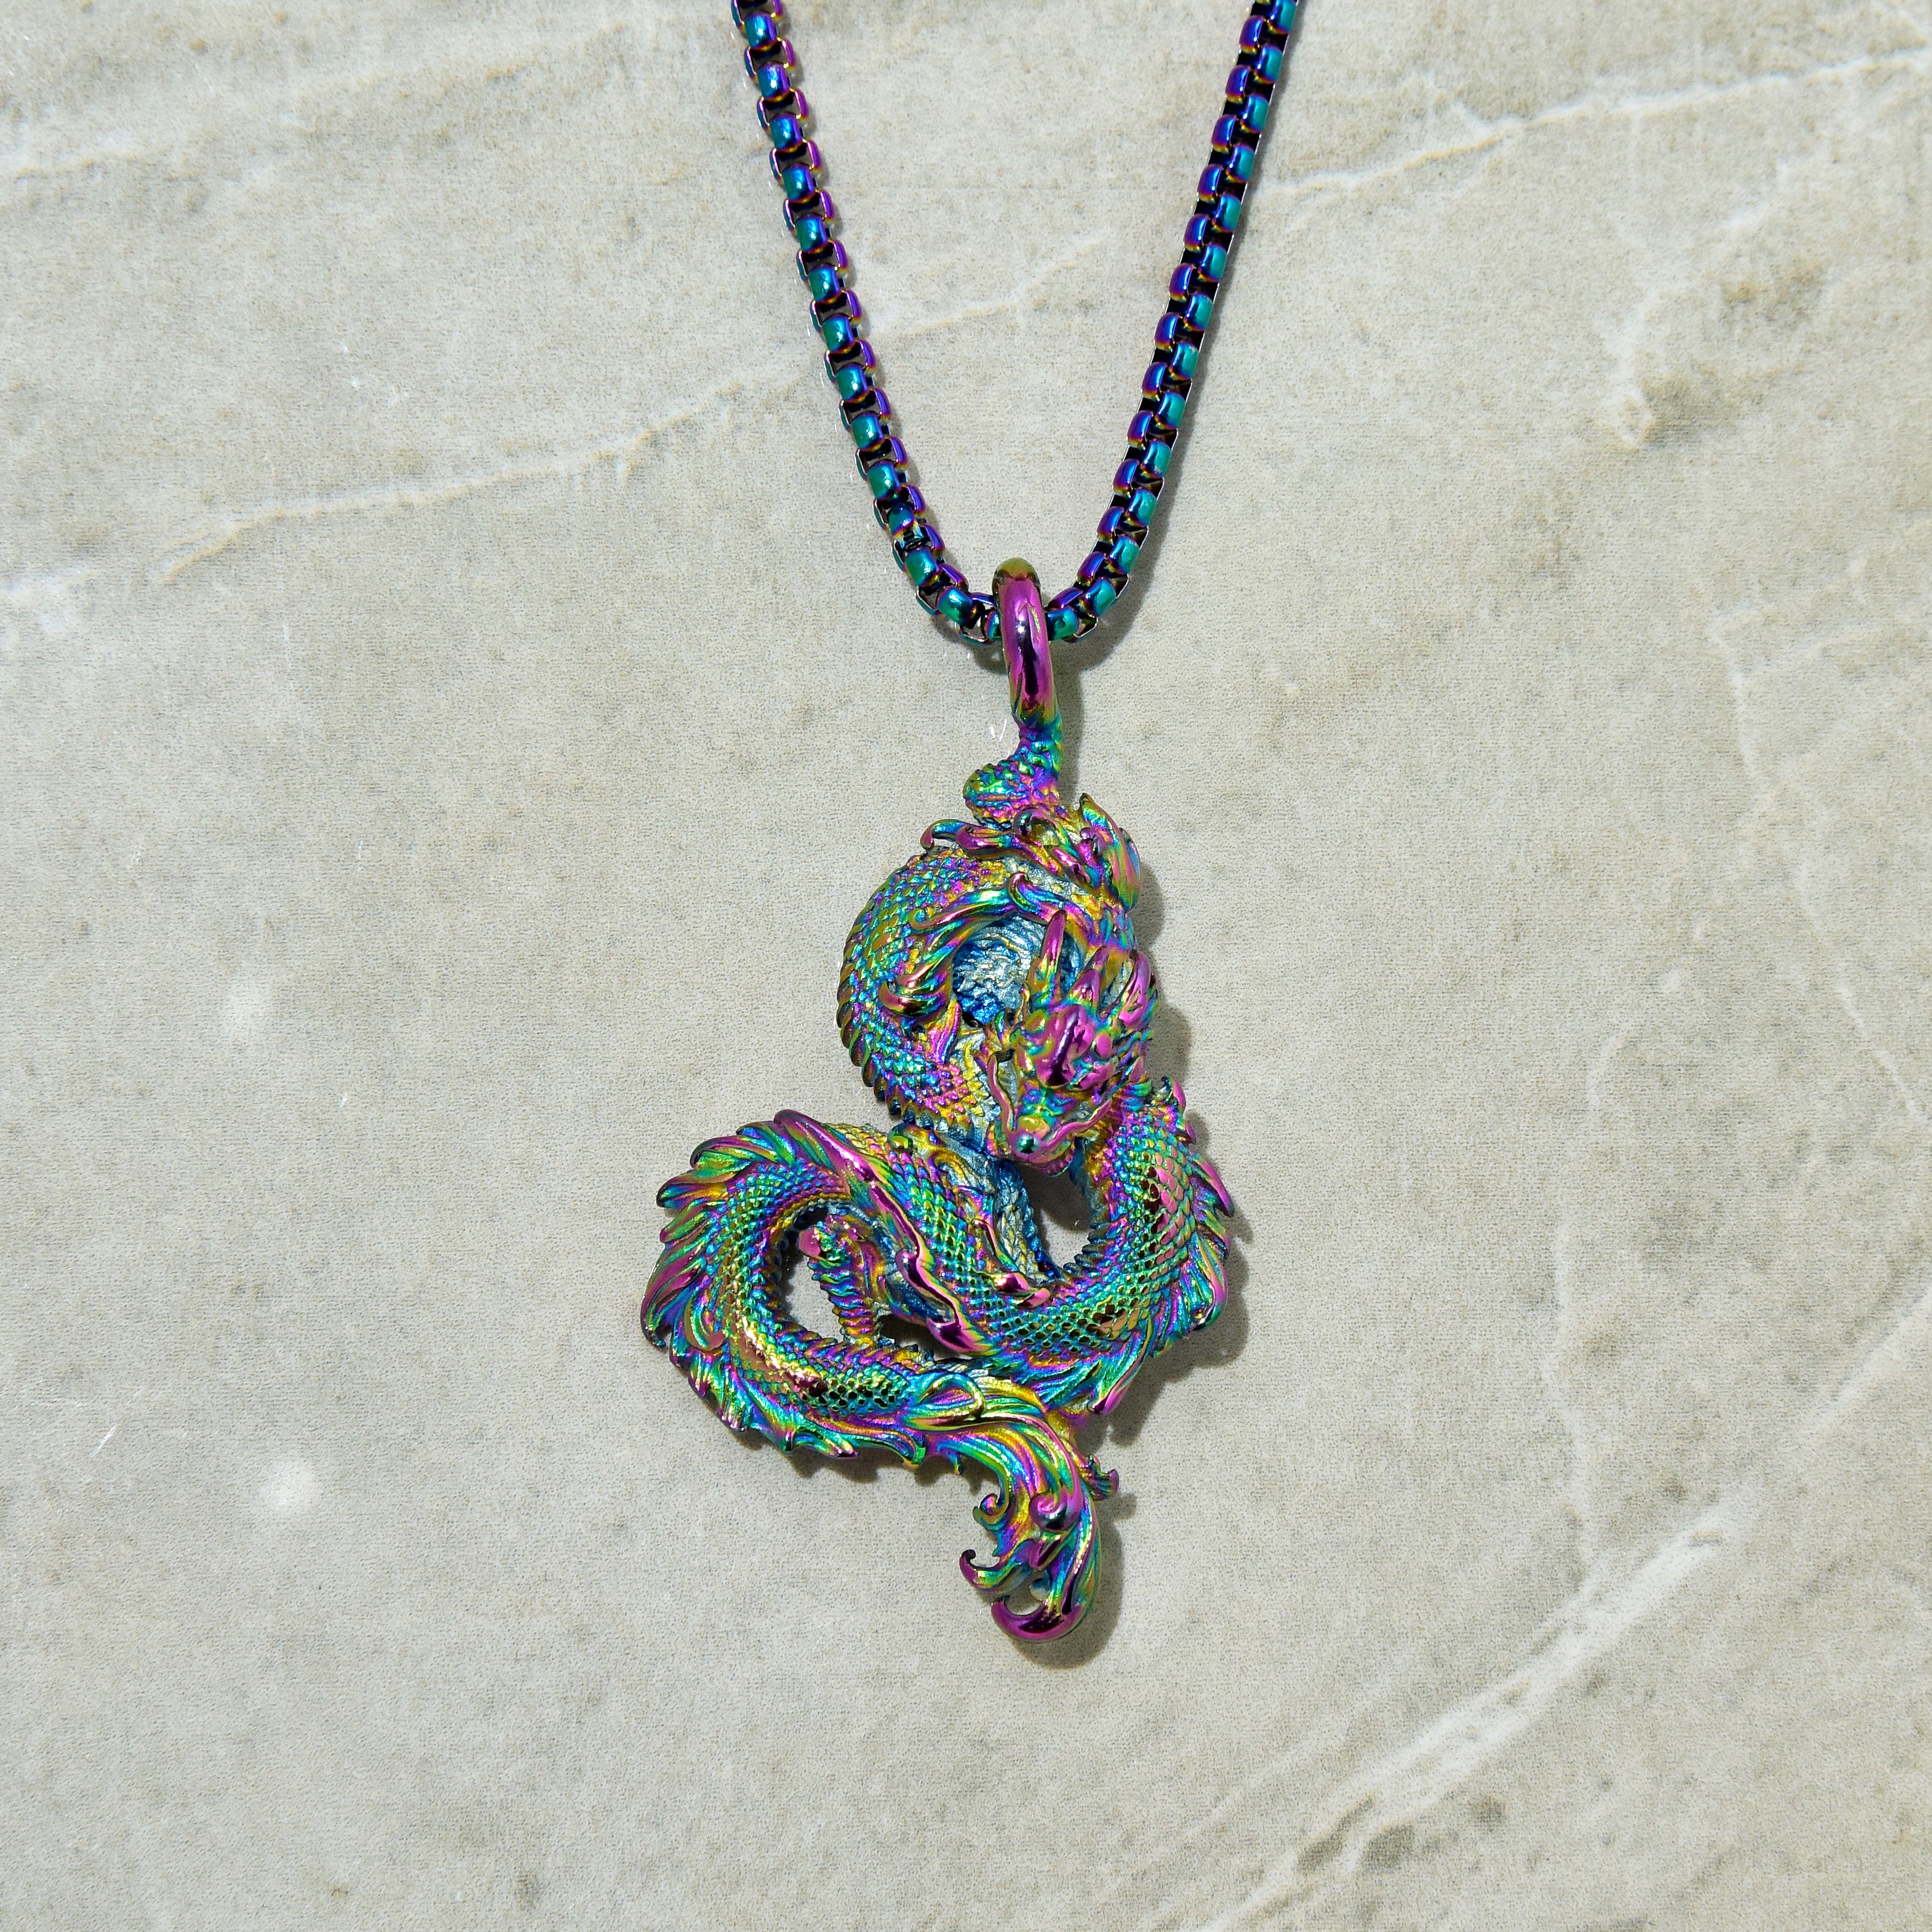 Kalifano Steel Hearts Jewelry Aurora Borealis Dragon Steel Hearts Necklace SHN516-AB